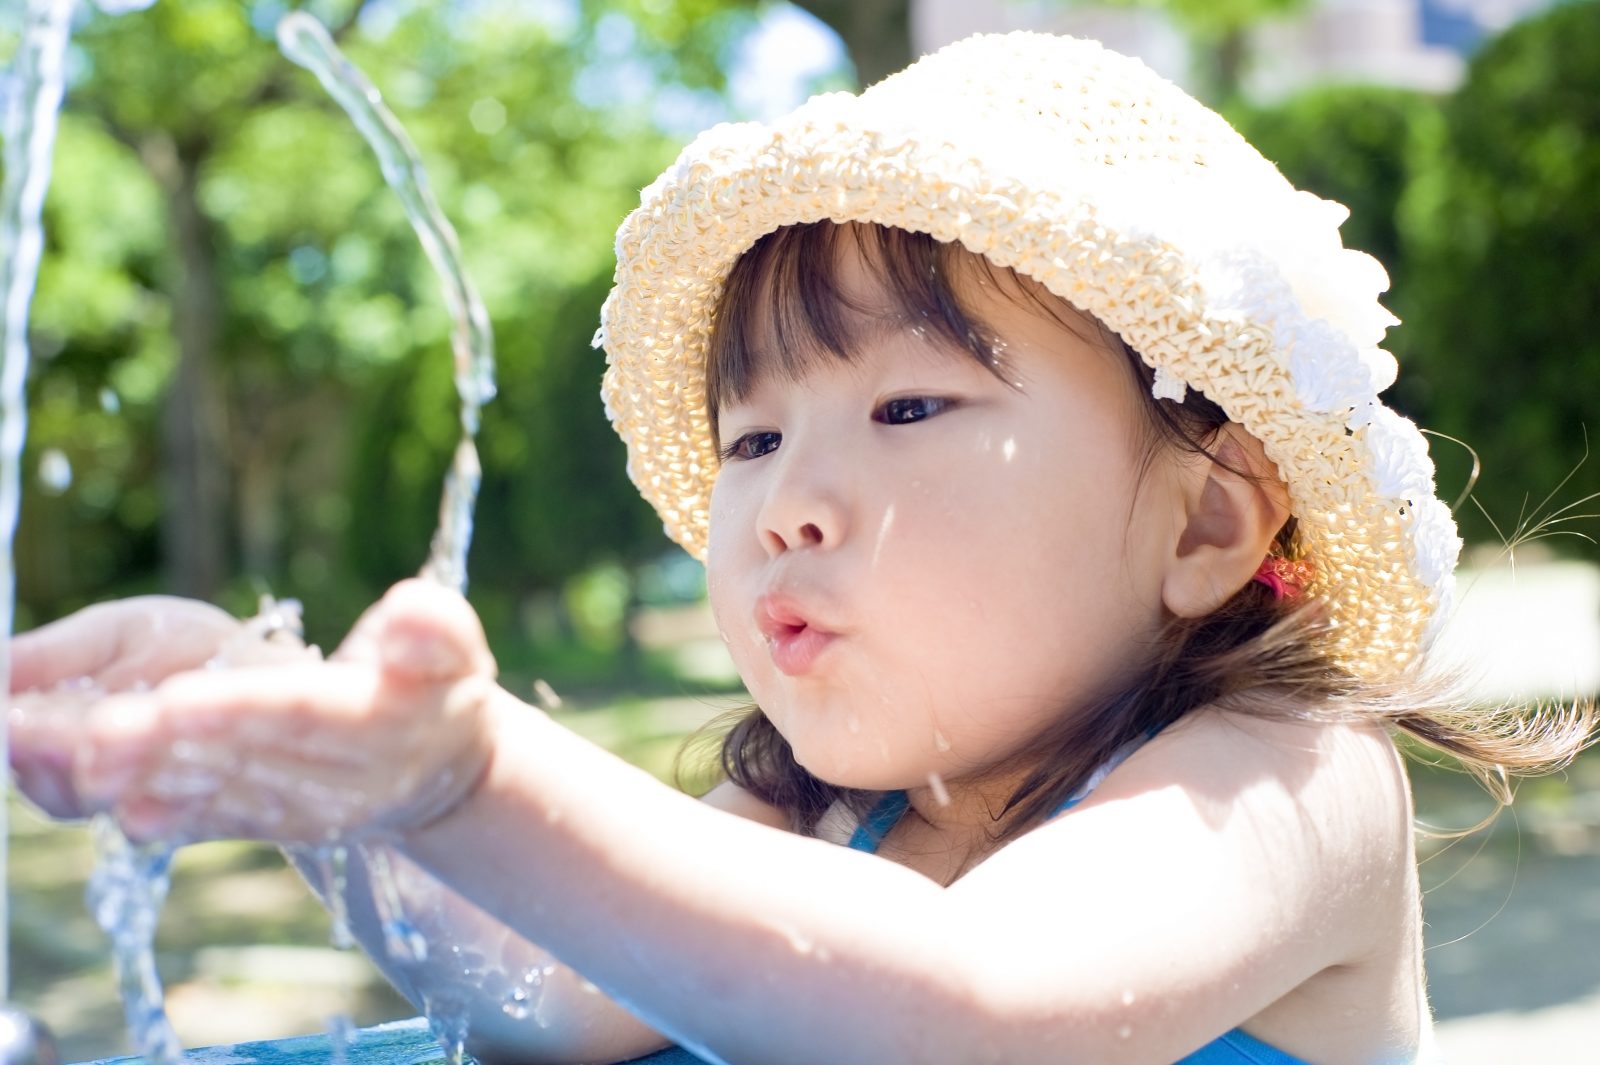 Girl drinks water by Kai Keisuke via Shutterstock